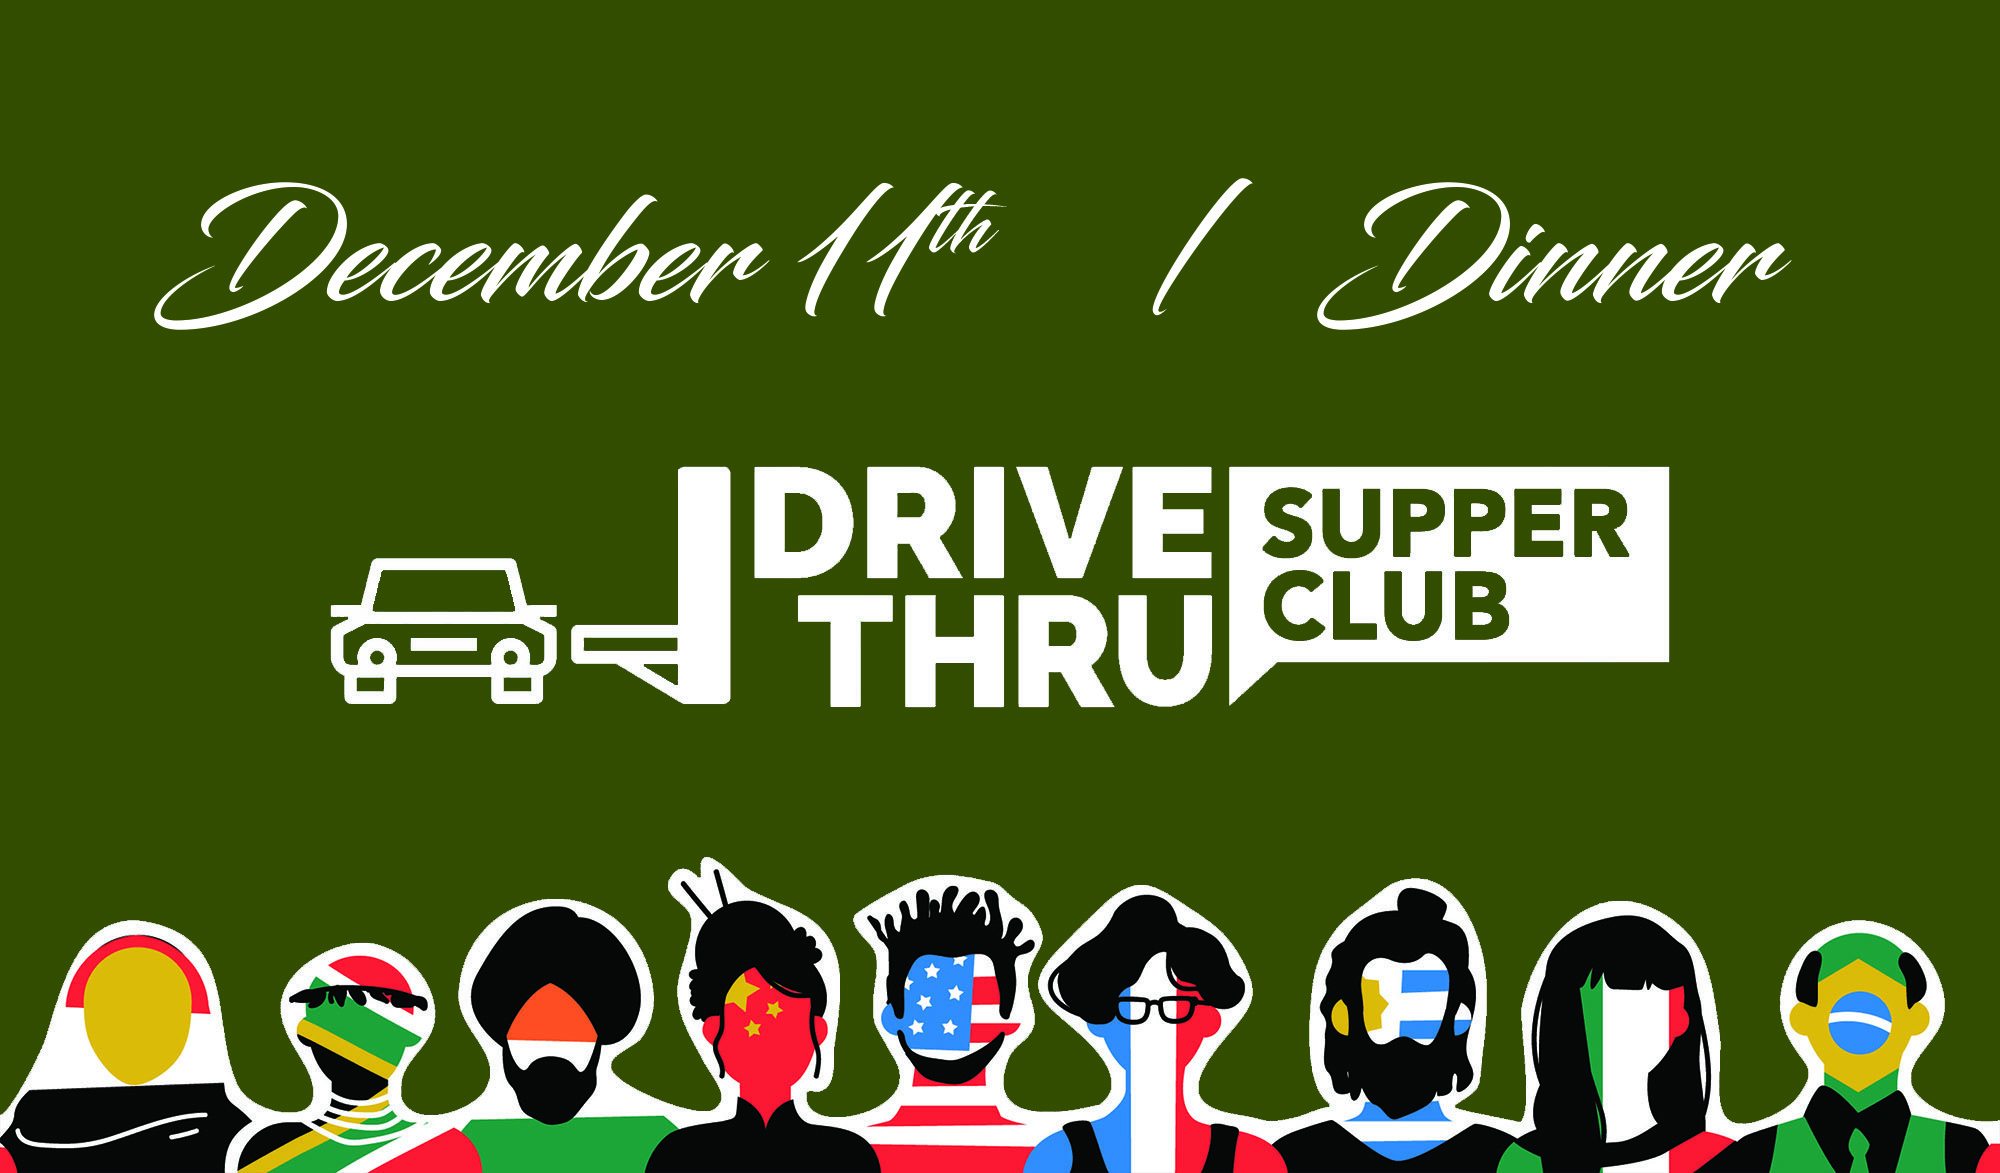 December 11 - Supper Club Dinner